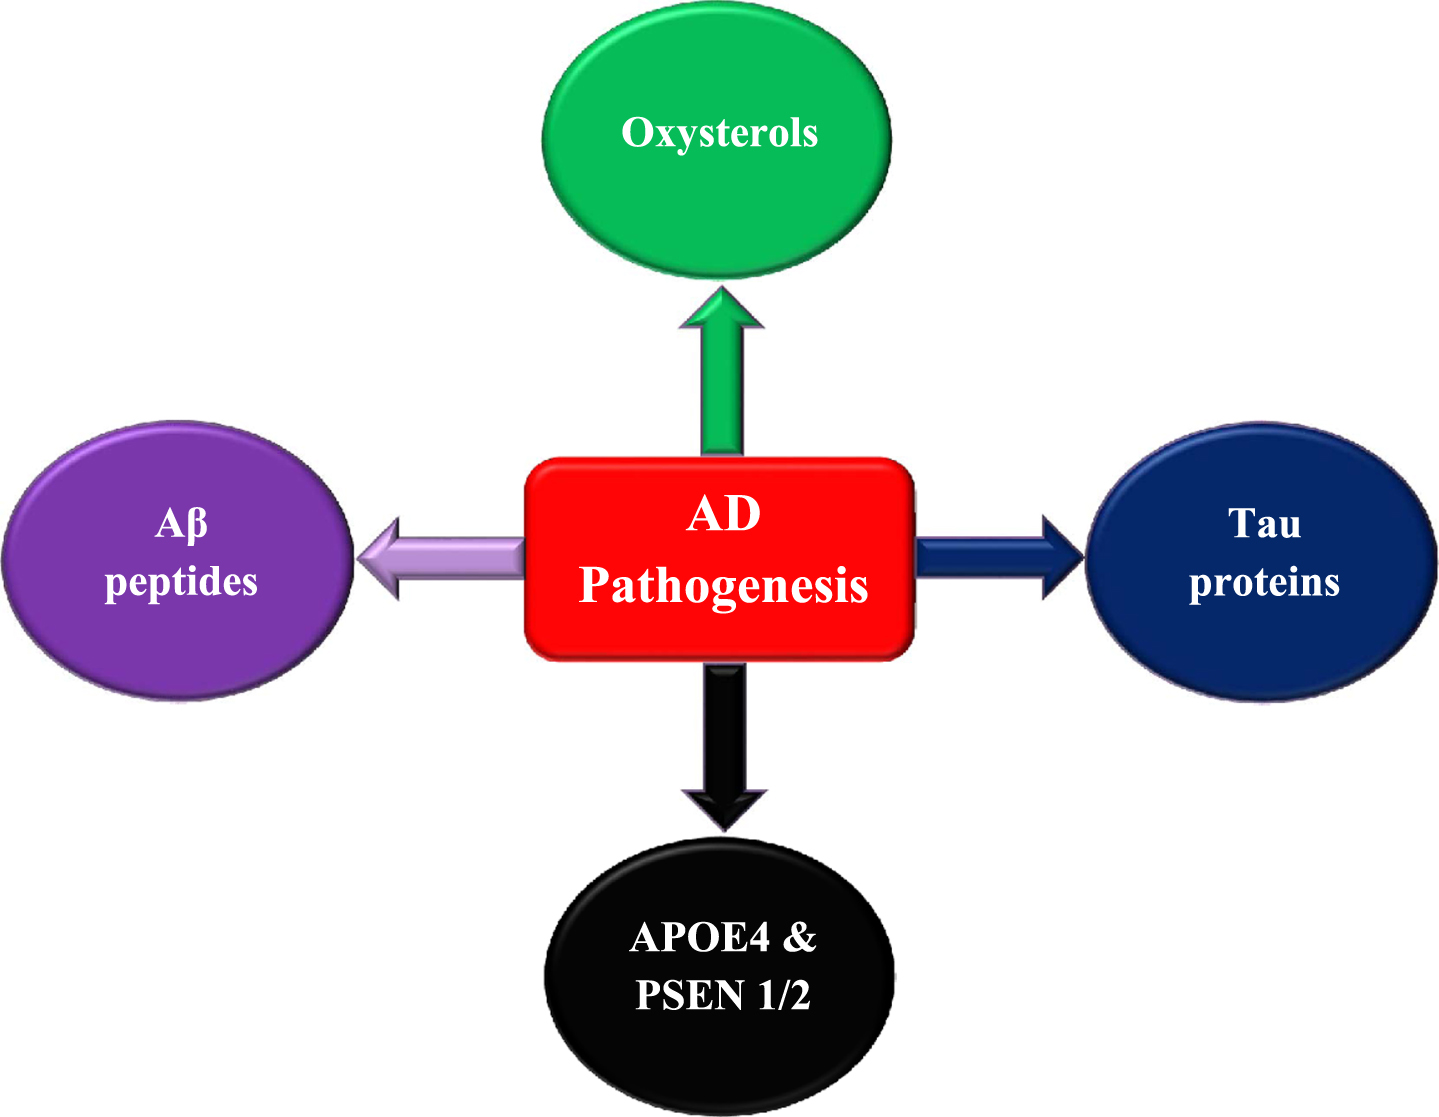 Factors contribute to AD pathogenesis and development.